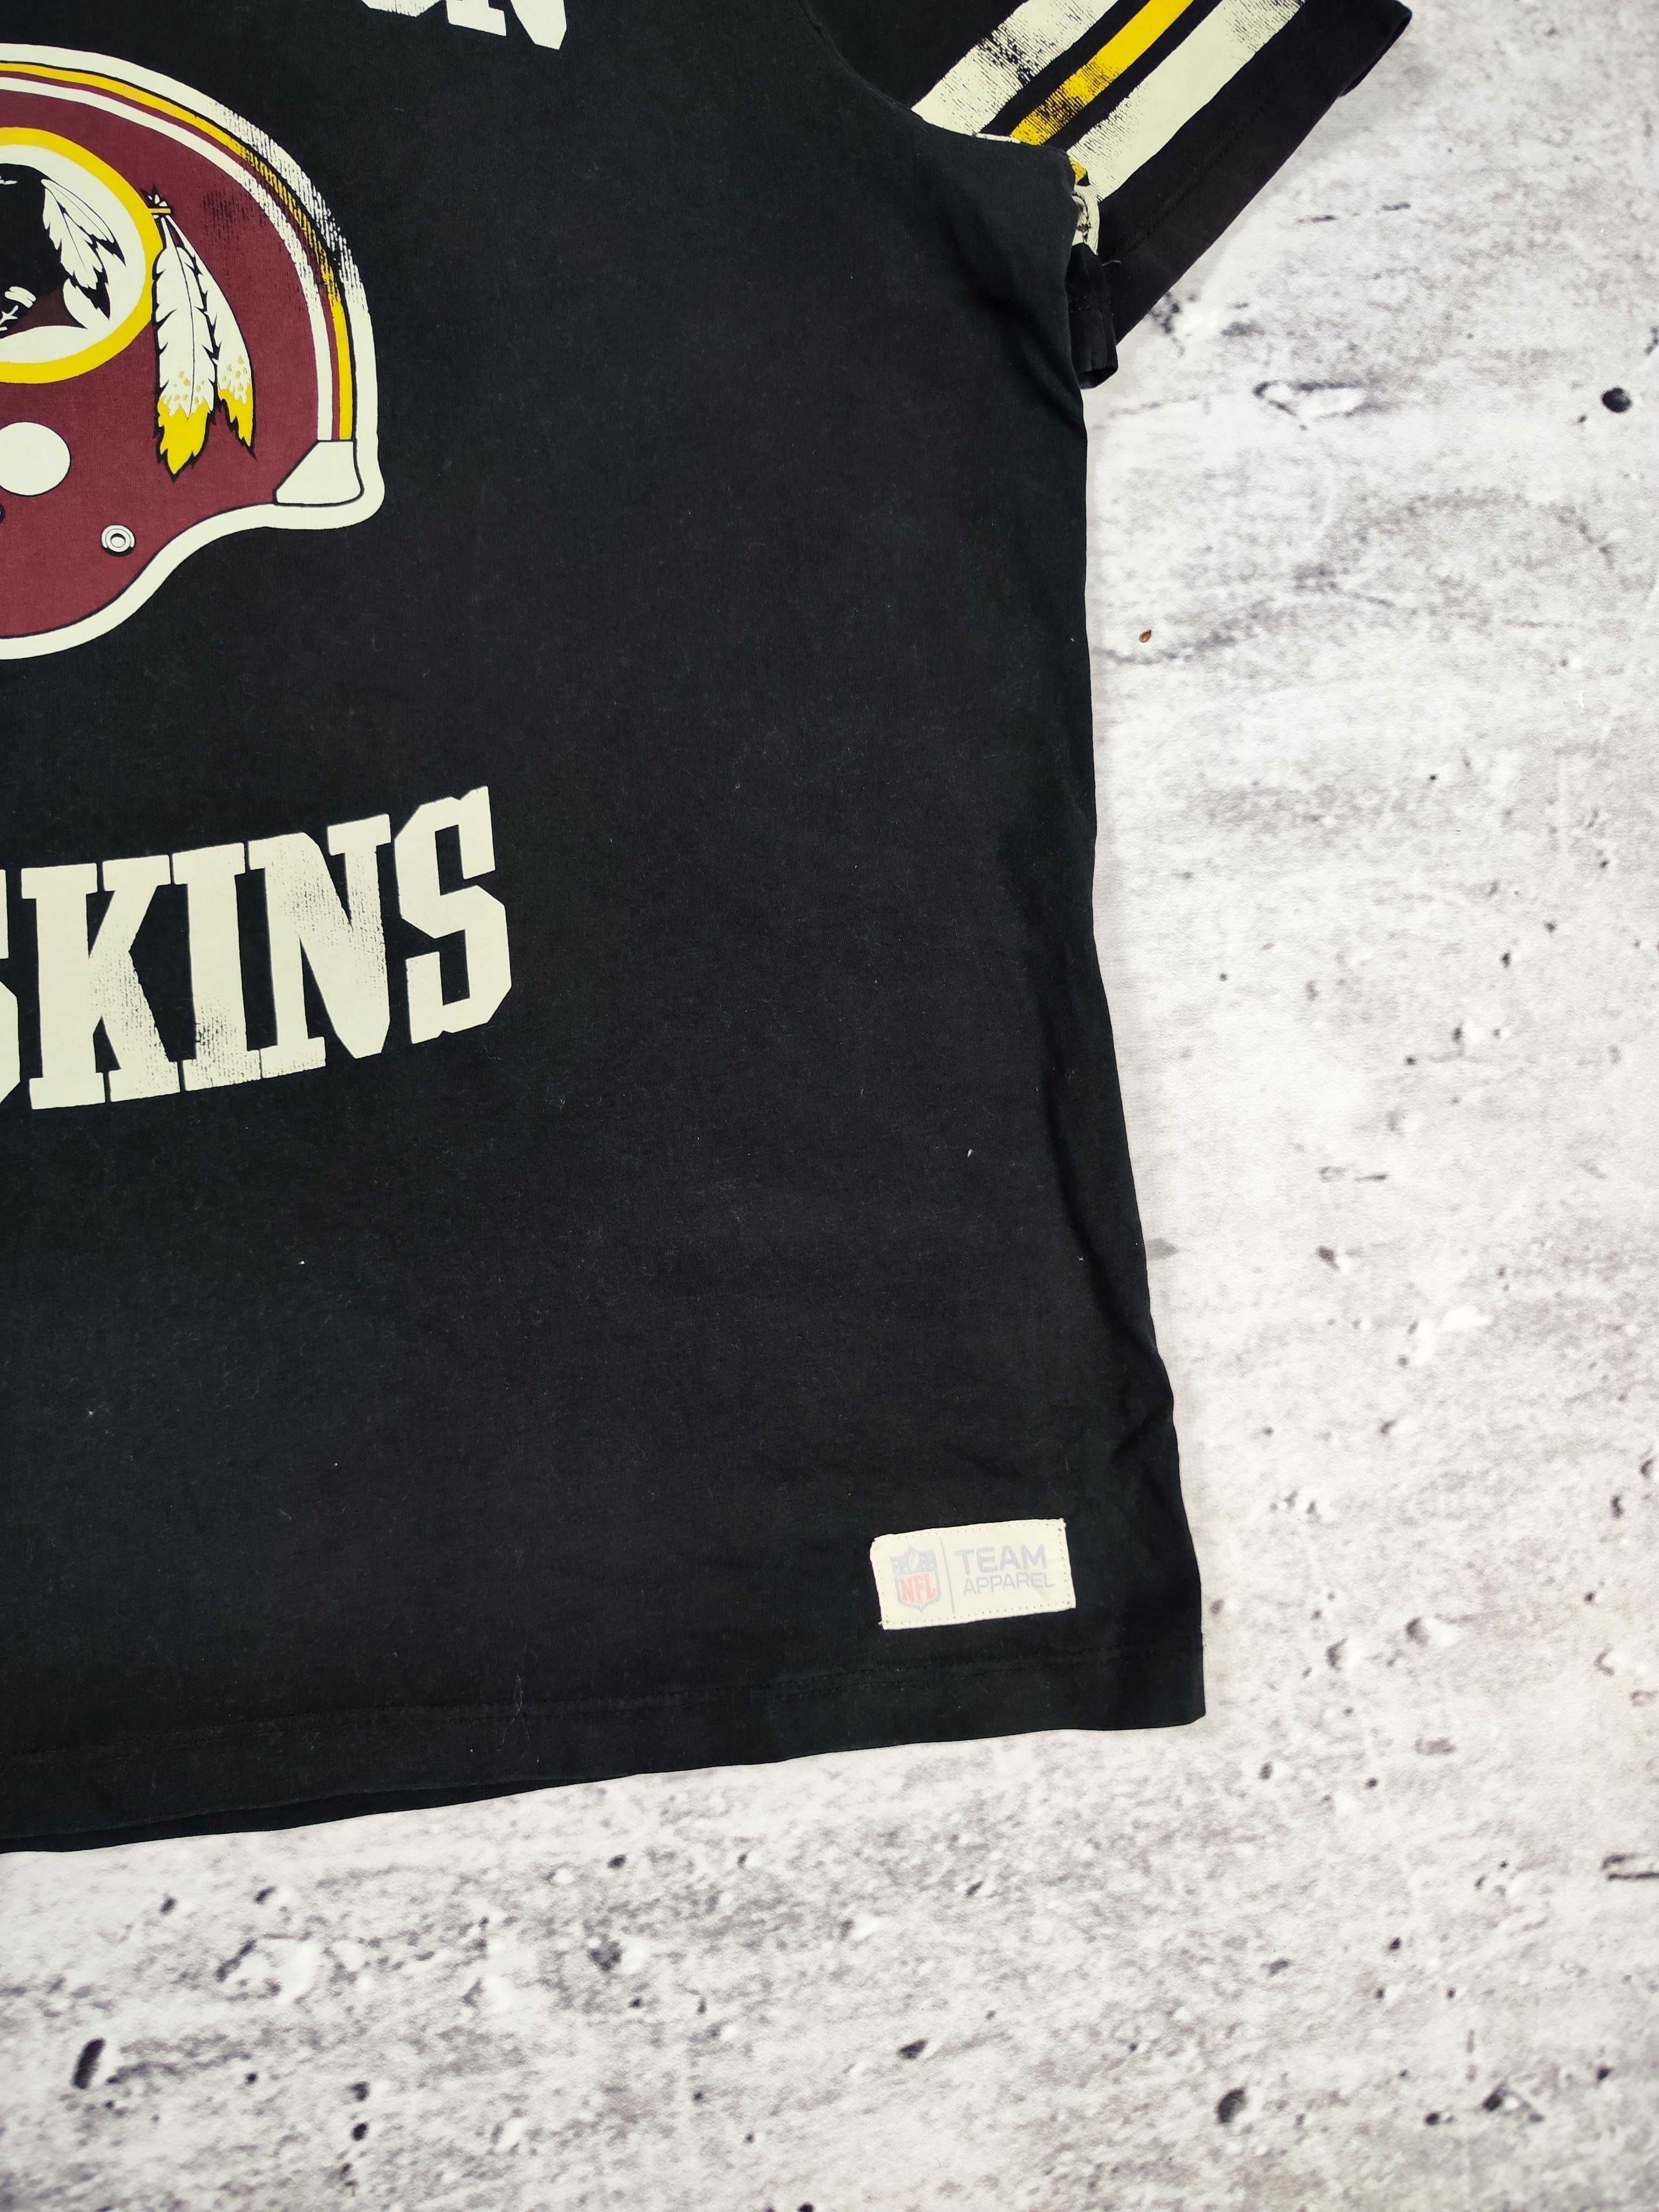 Koszulka NFL Redskins boxy t-shirt r. XL